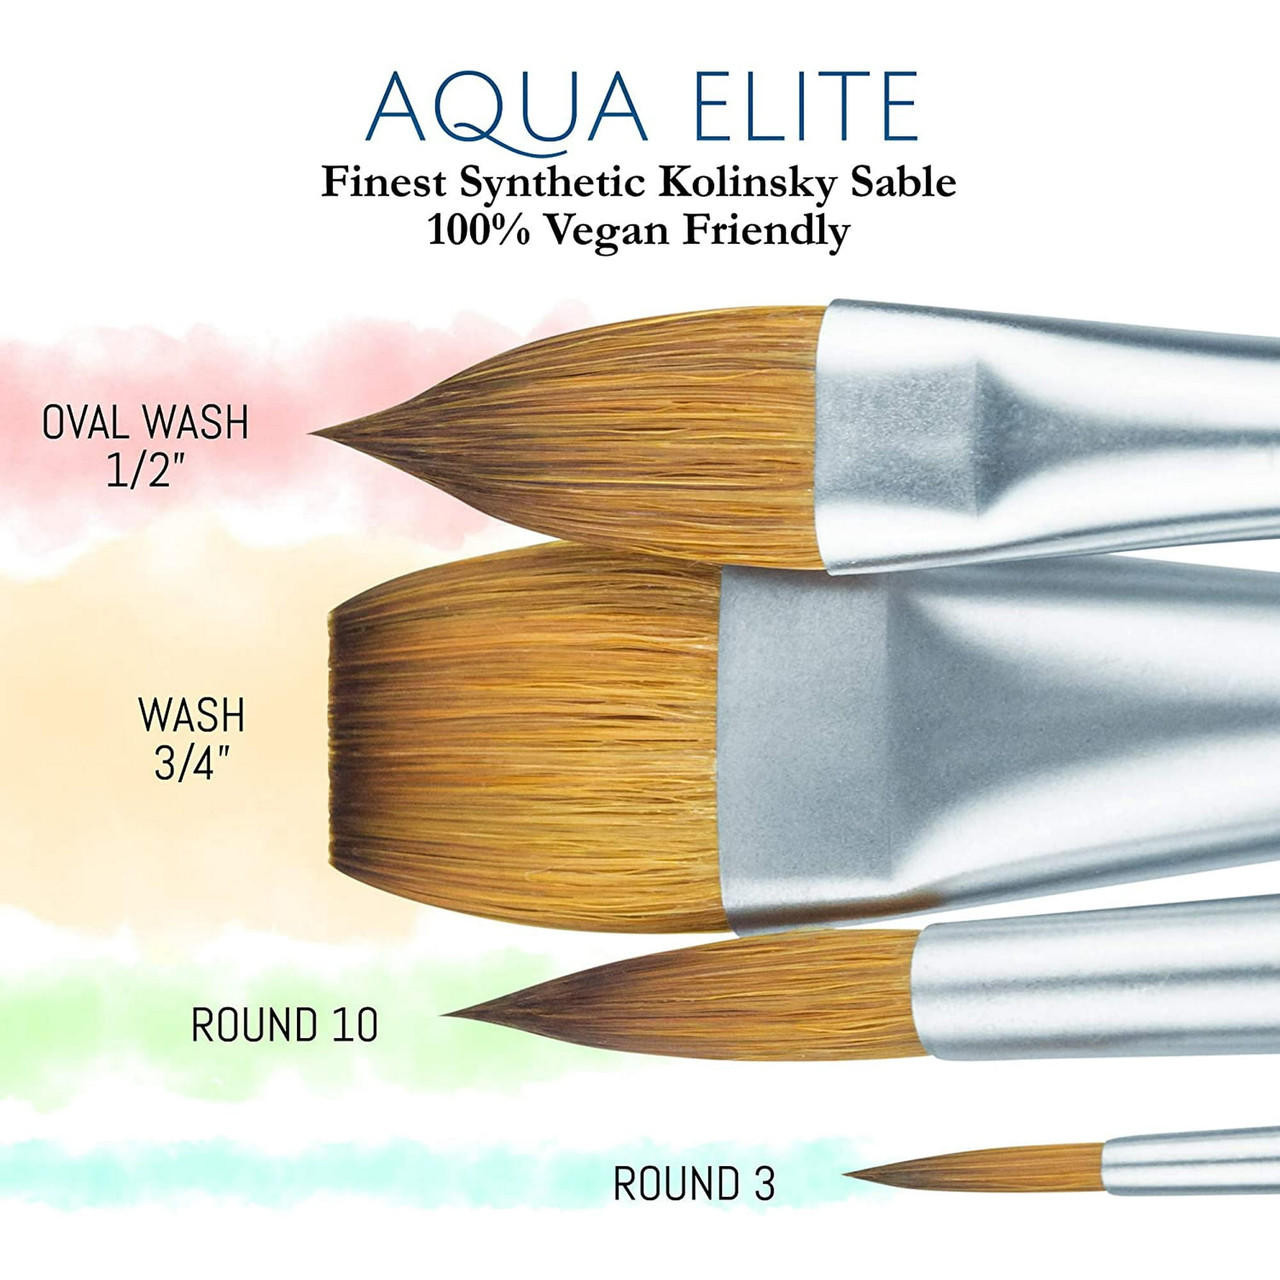 Princeton 4850 Aqua Elite Synthetic Kolinsky Sable Brush Wash 3/4